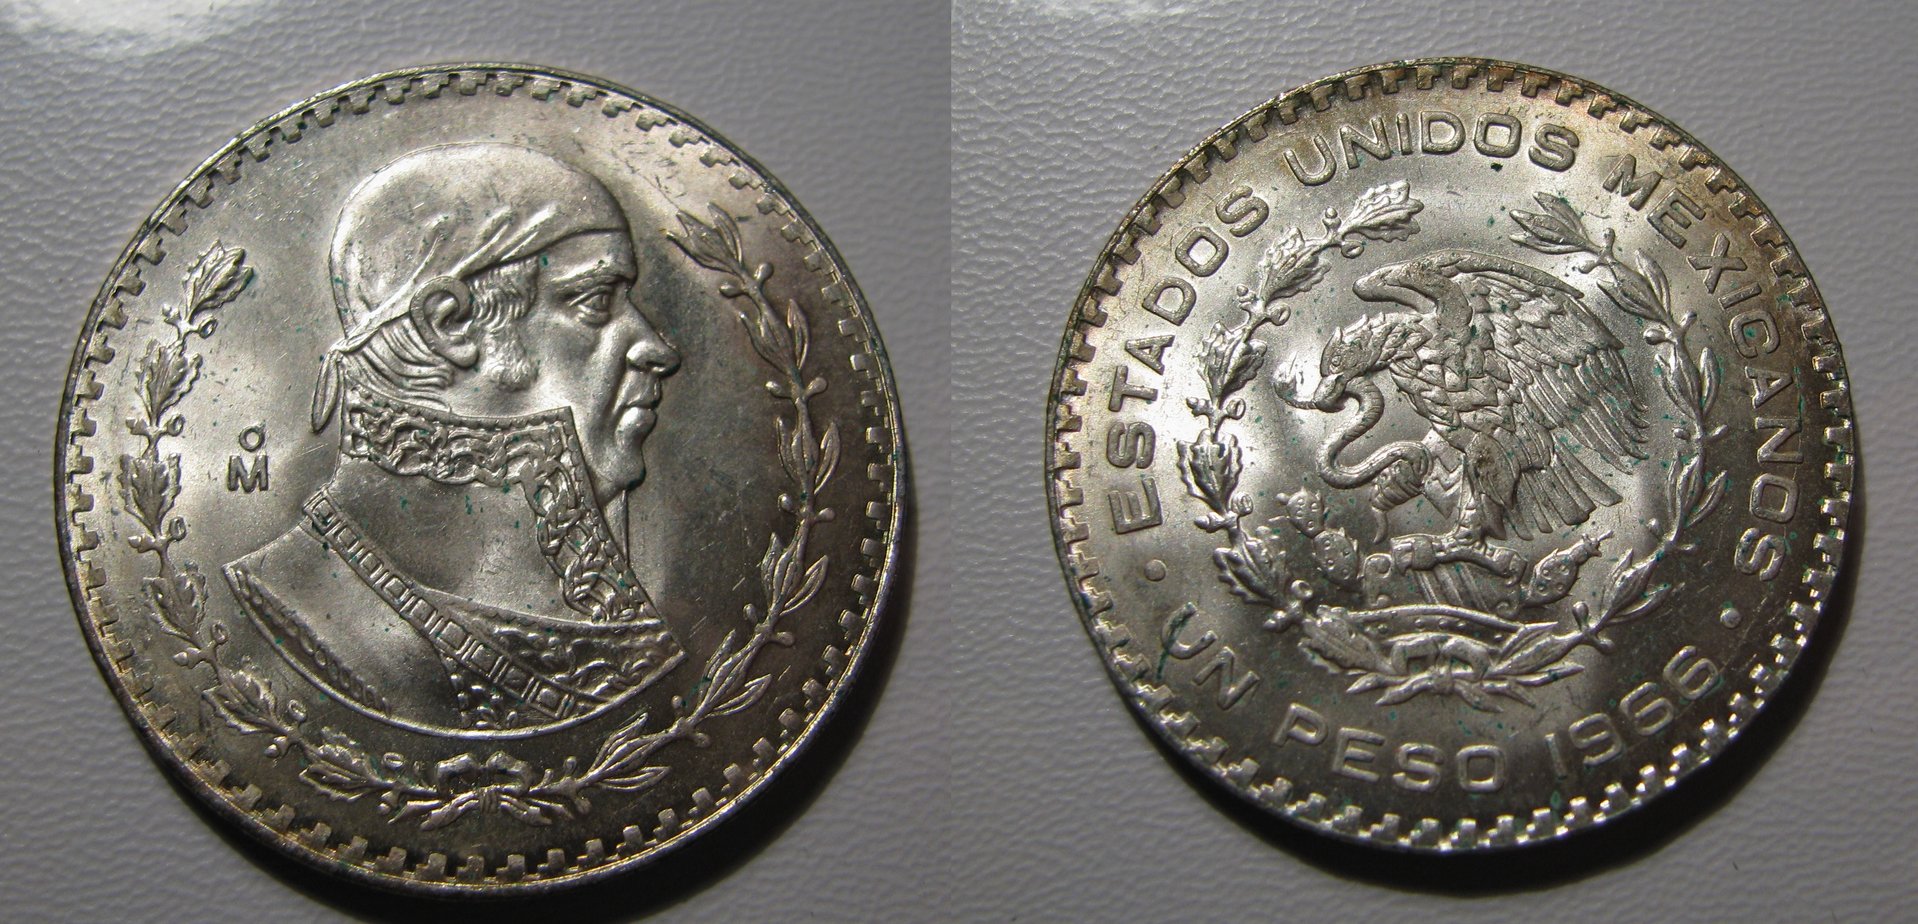 1966 Mexico 1 Peso.jpg